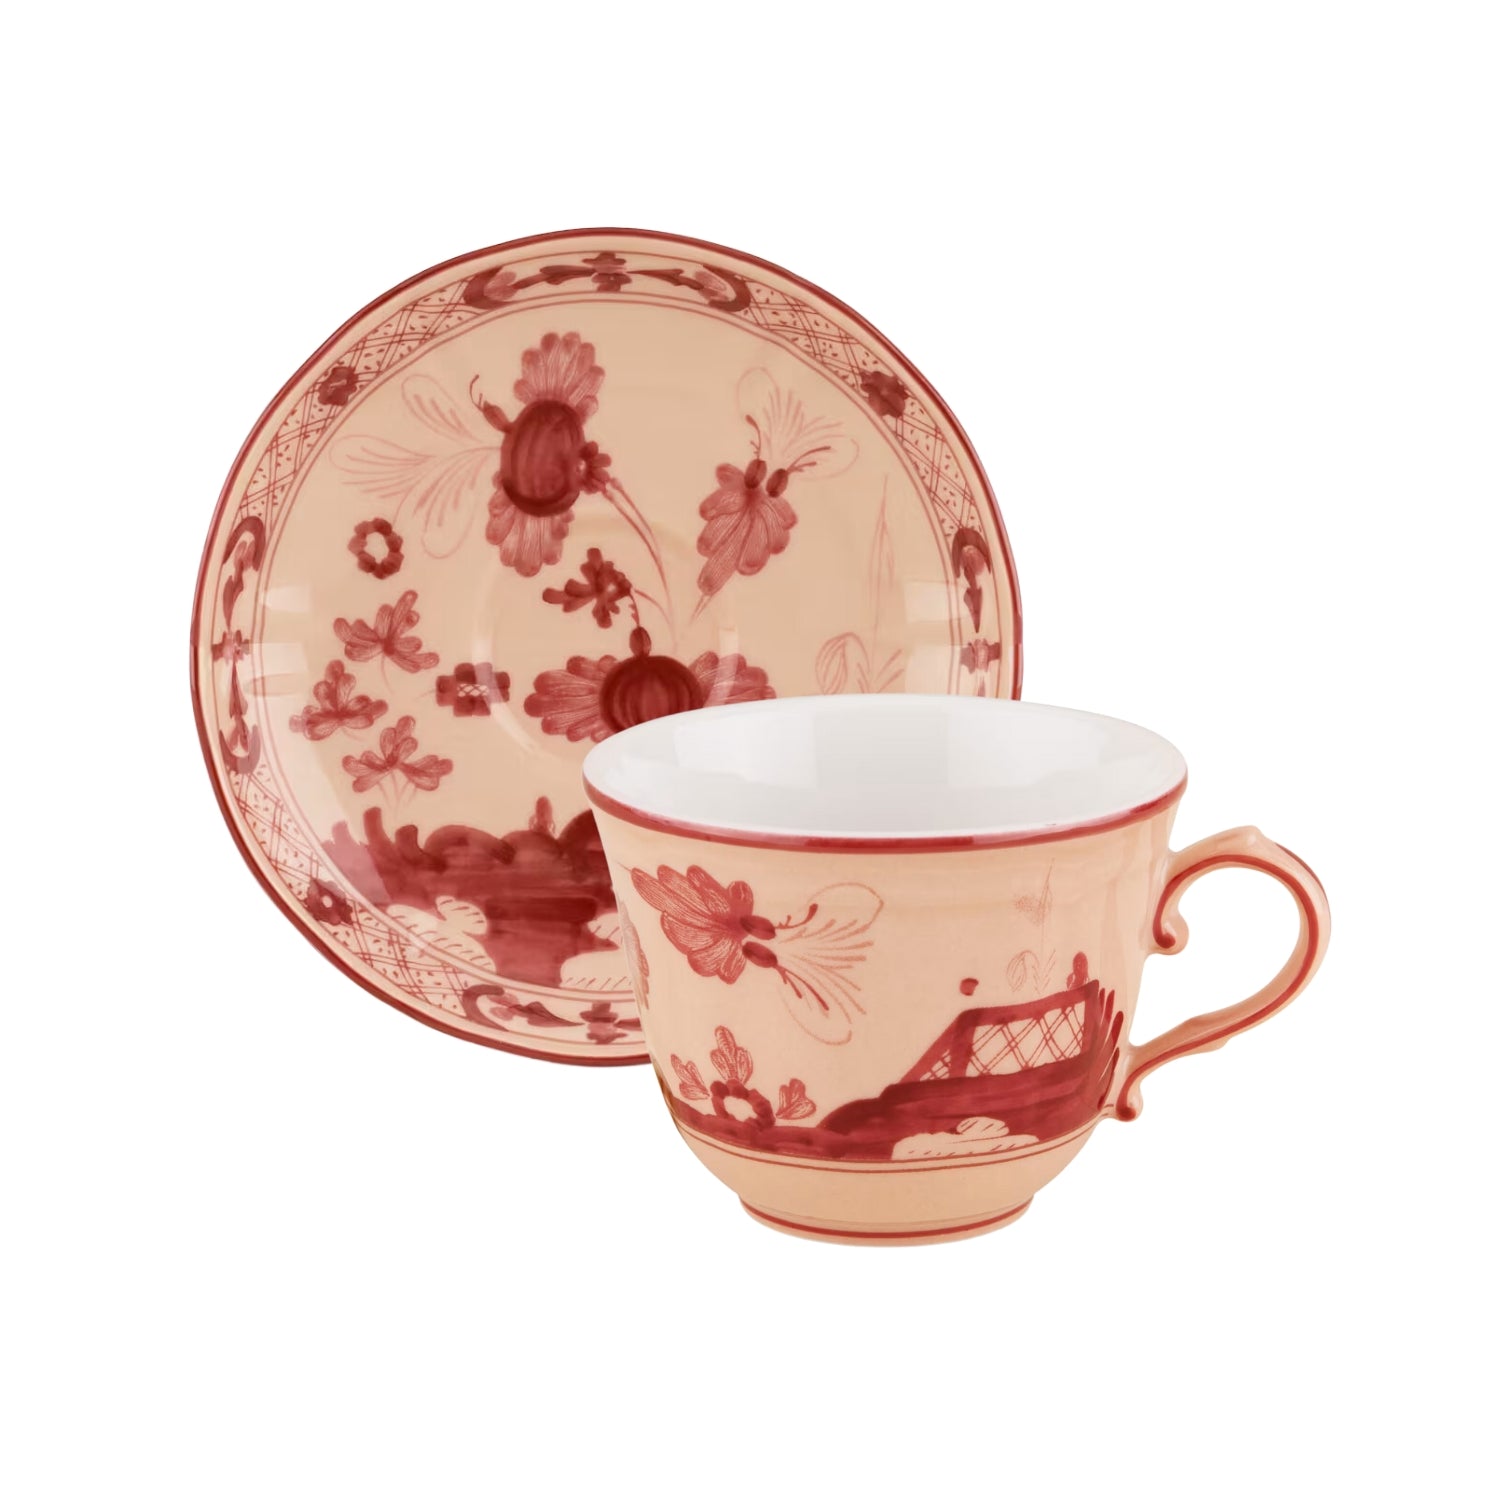 Ginori 1735 Oriente Italiano Coffee cup and saucer set